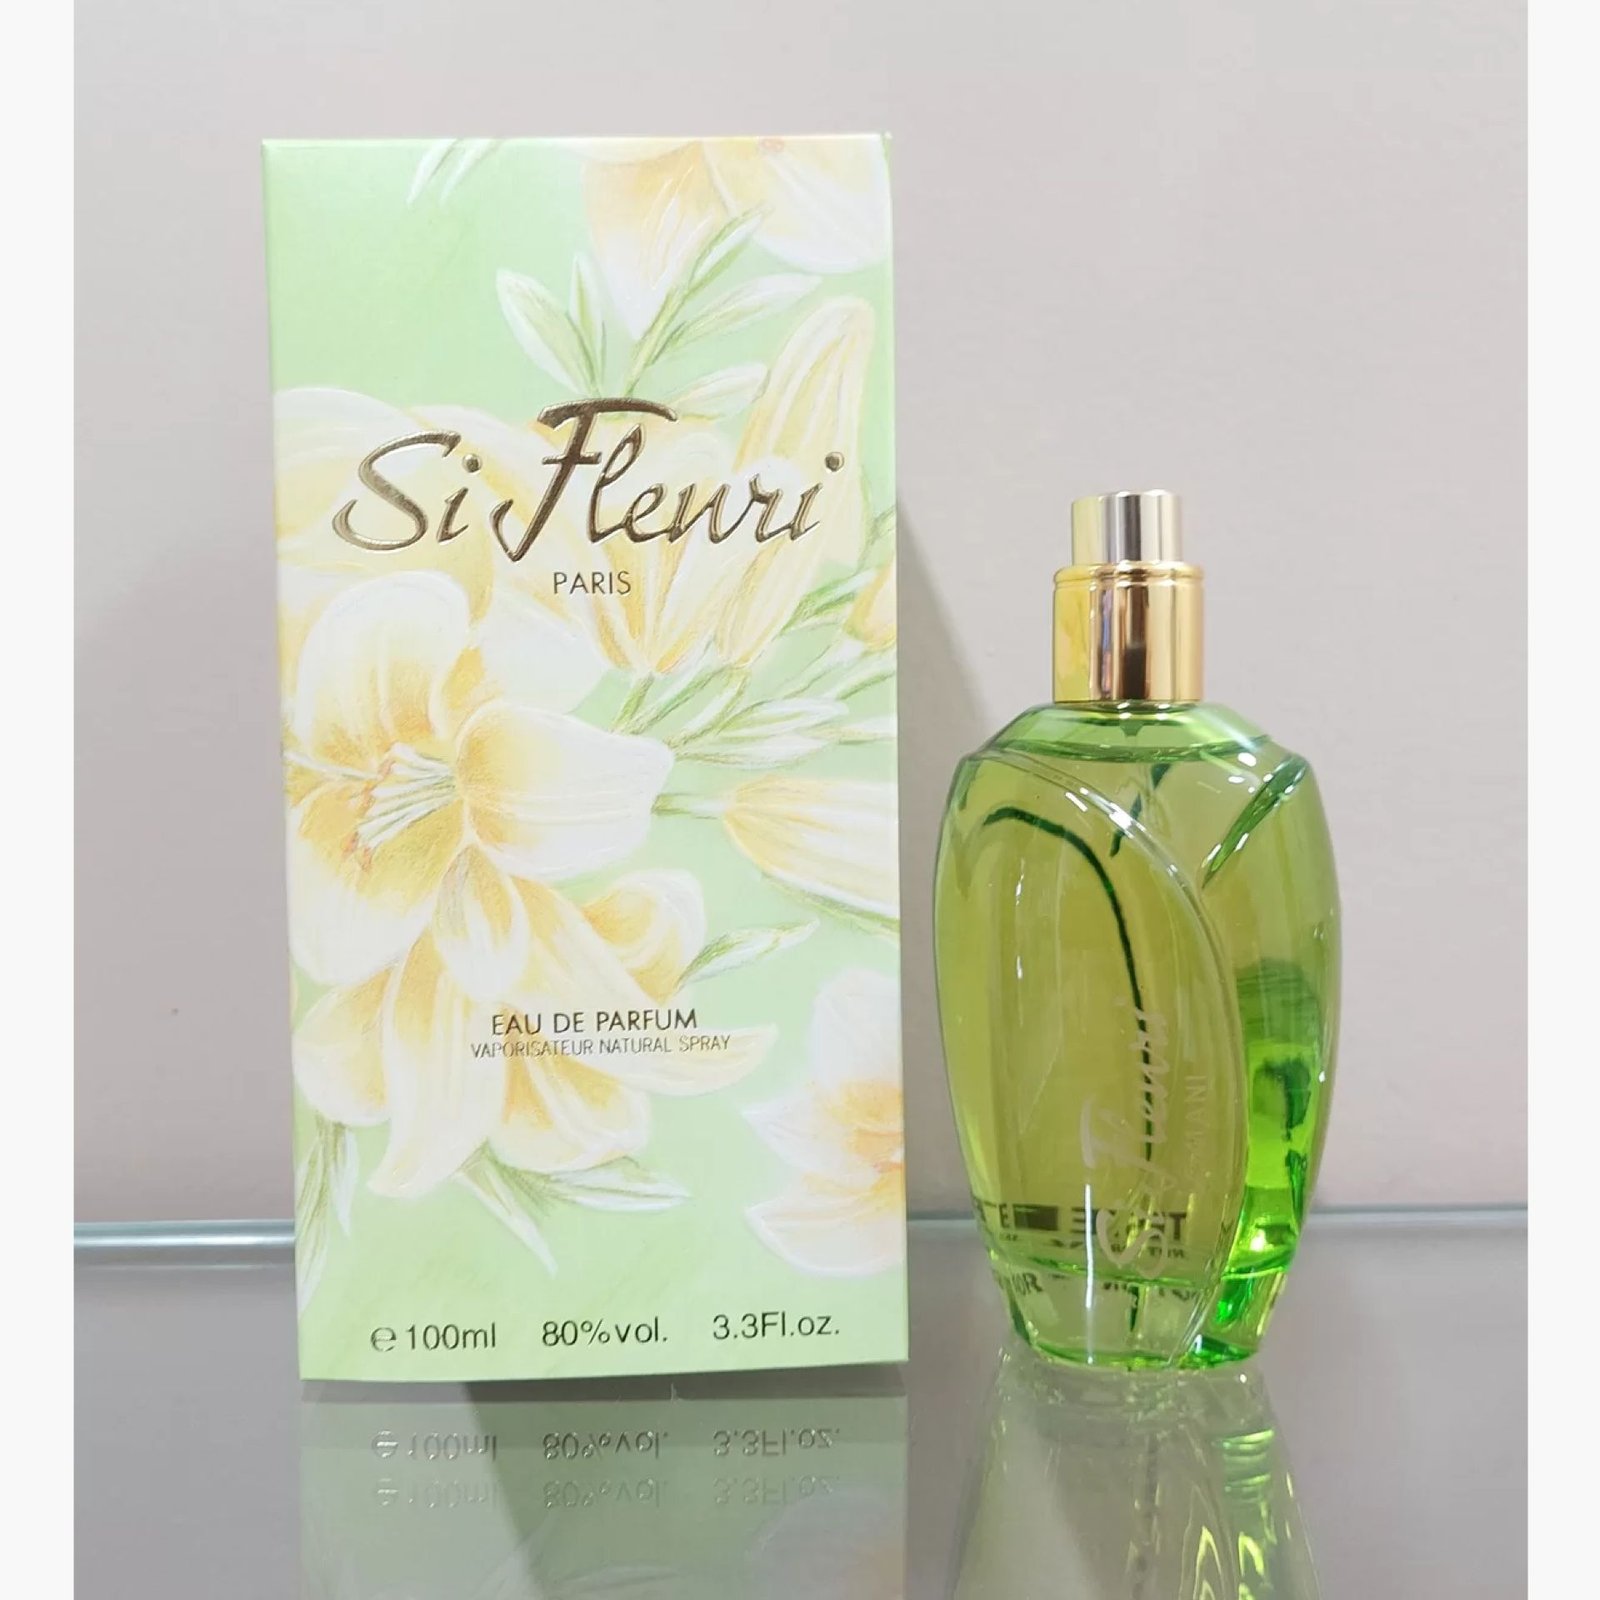 Buy Matin Fleuri Paris Edp Perfume 100 ml at Rs. 5500 from Likeshop.pk